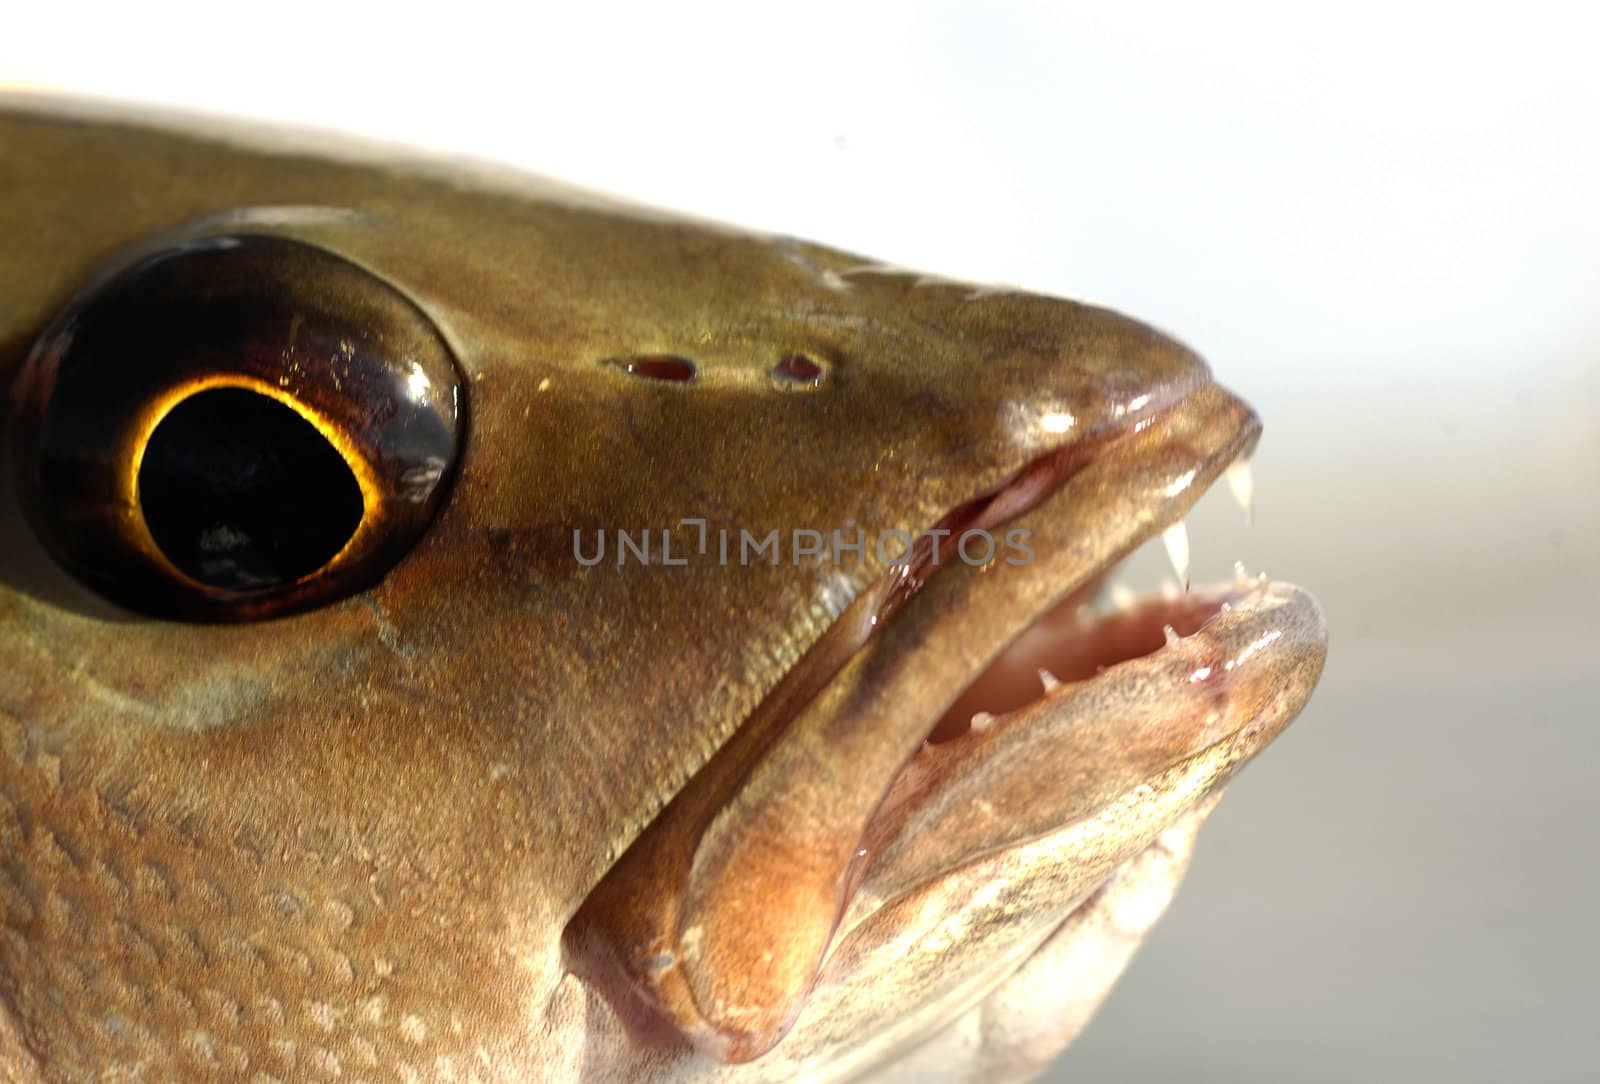 Close up image of mangrove snapper fish head, eyes and teeth